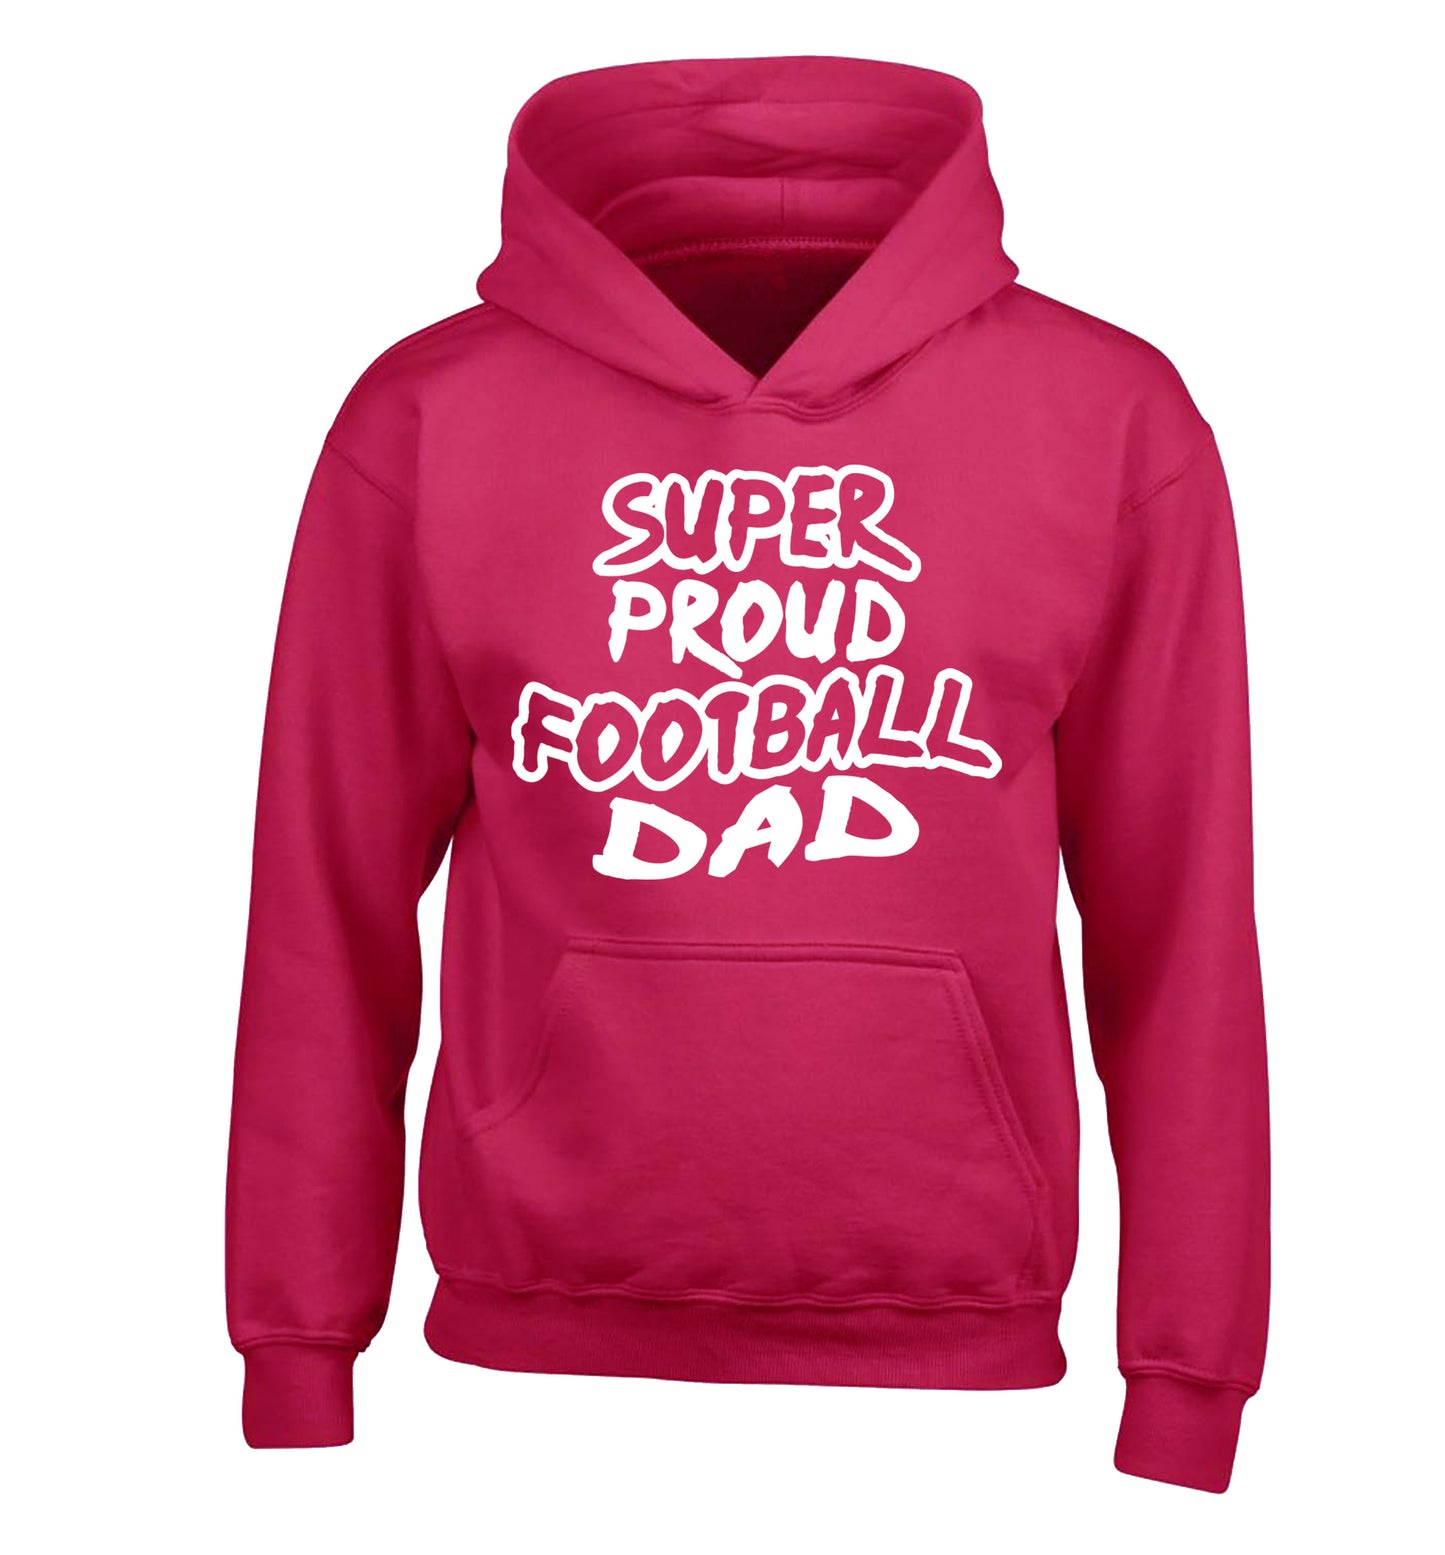 Super proud football dad children's pink hoodie 12-14 Years